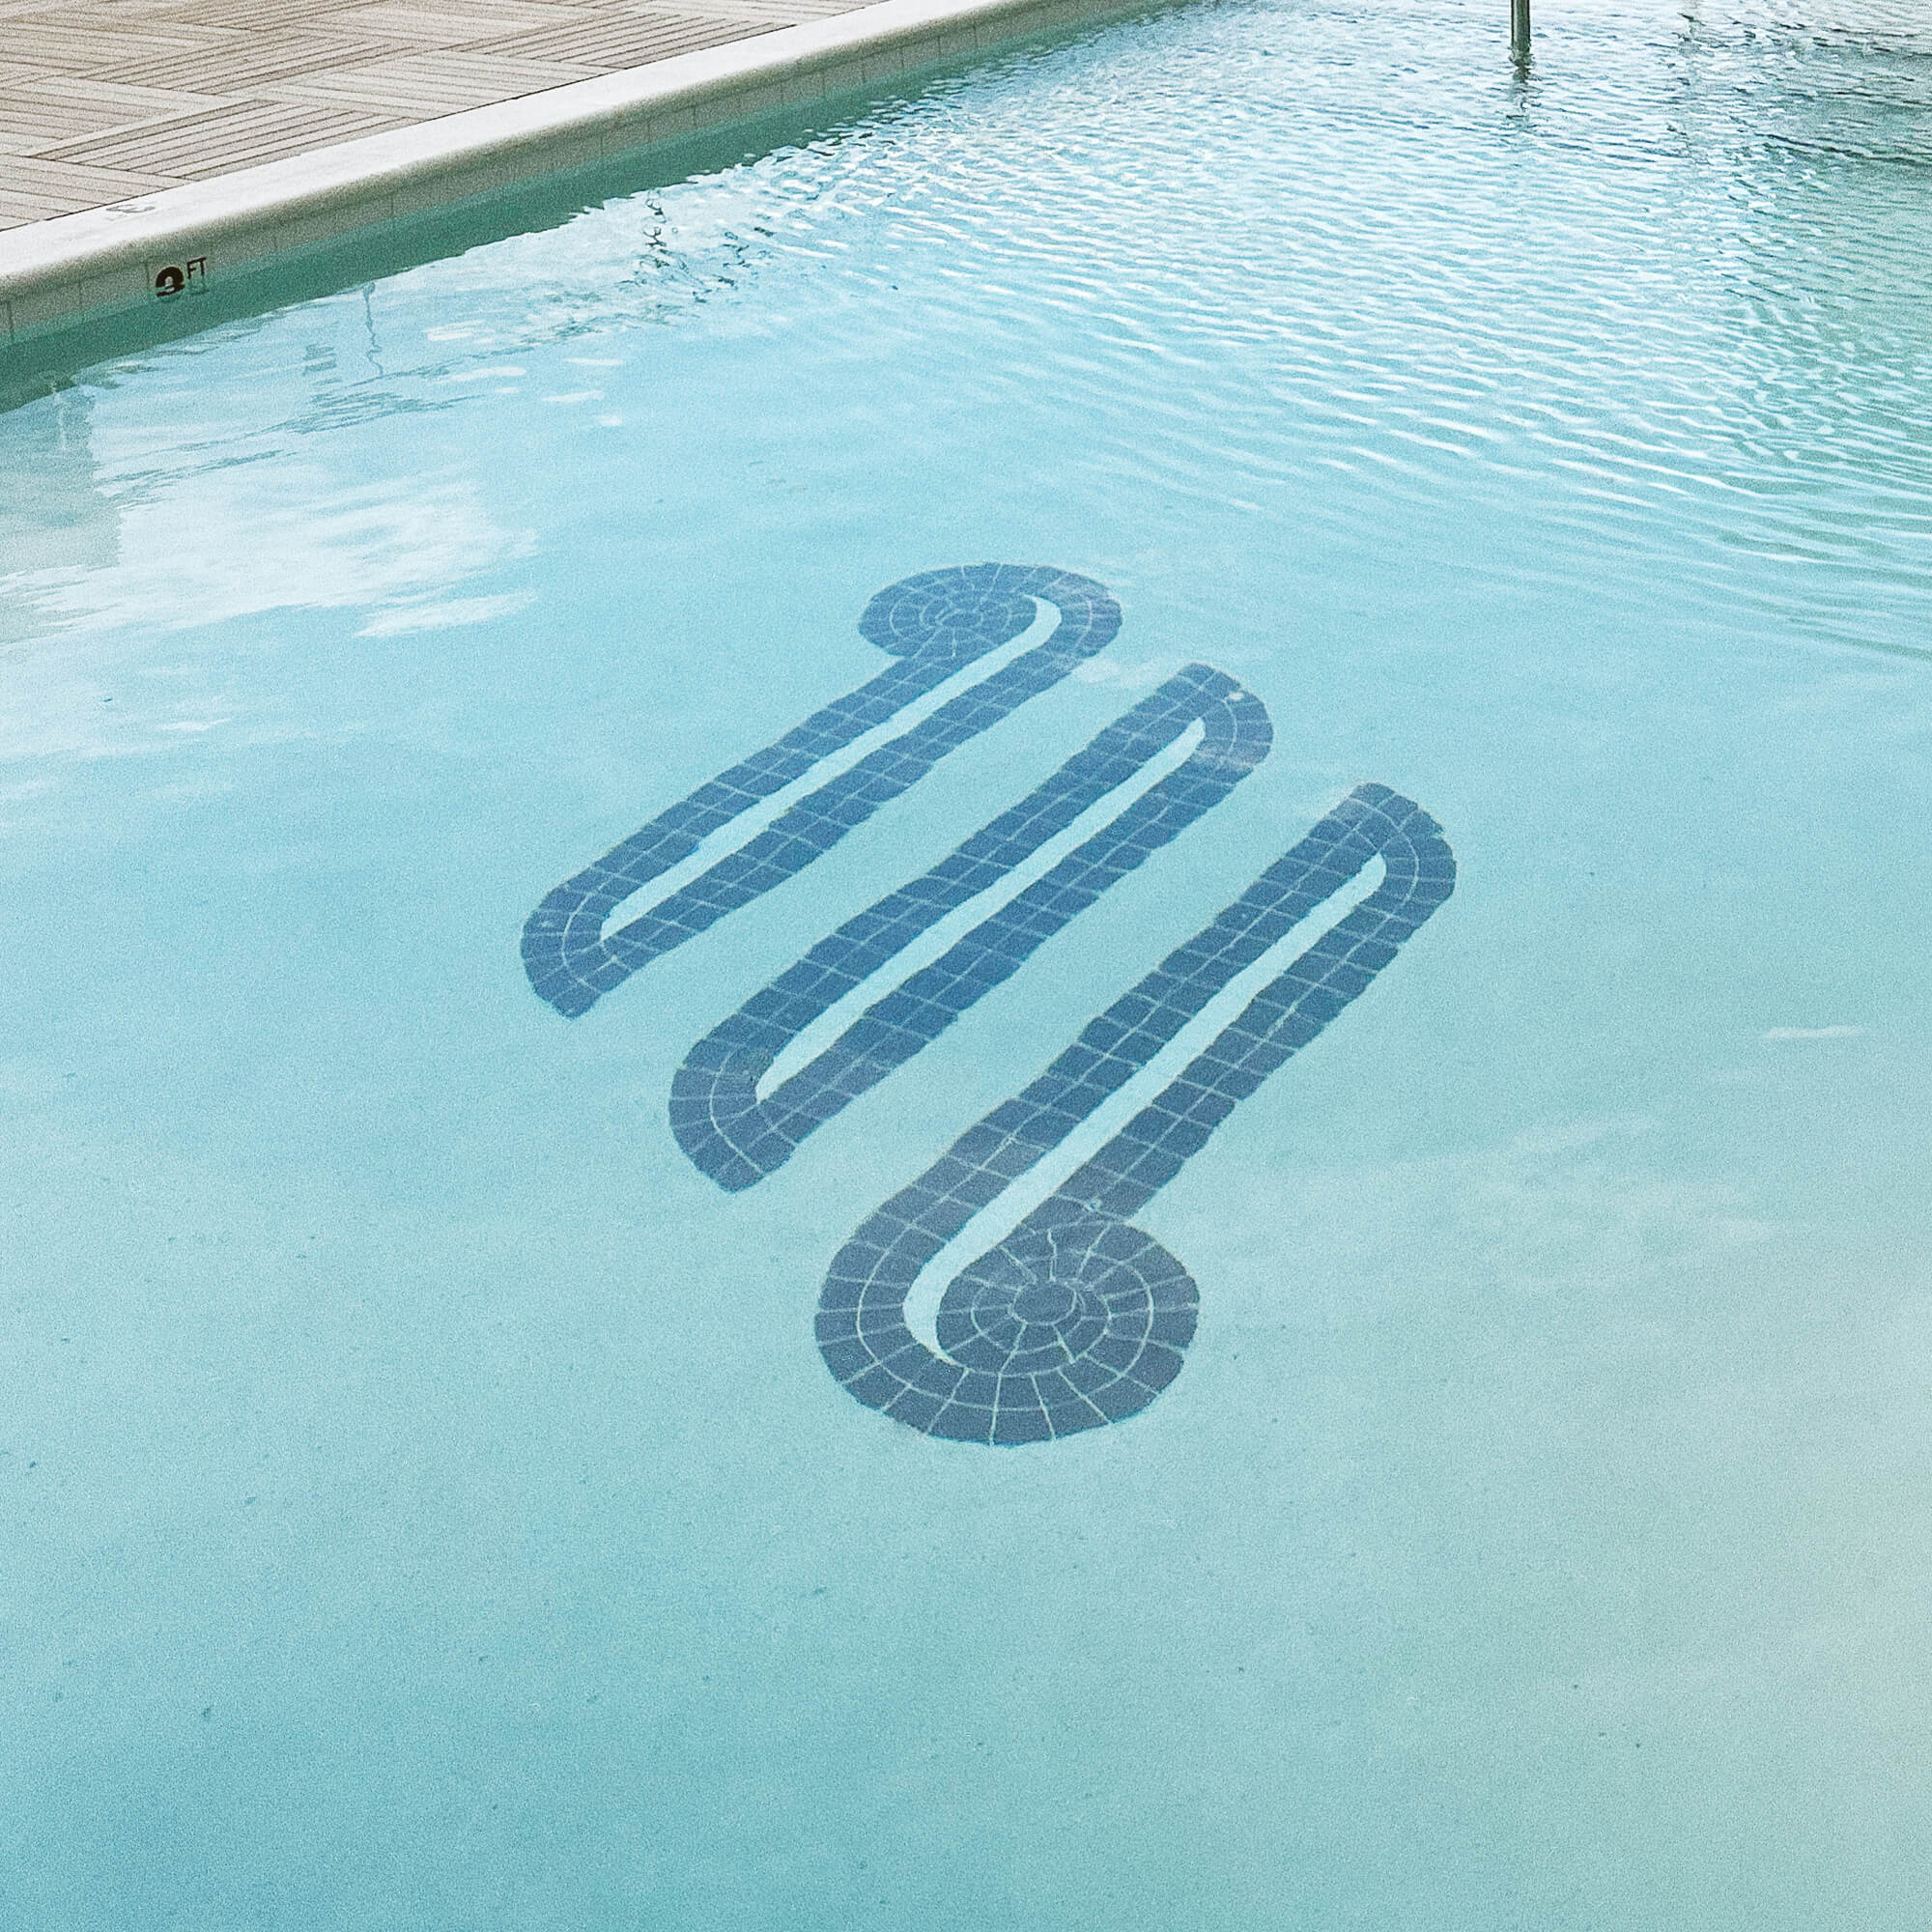 Pool floor tile mosaic insignia featuring Motif on Music Row brand logo design